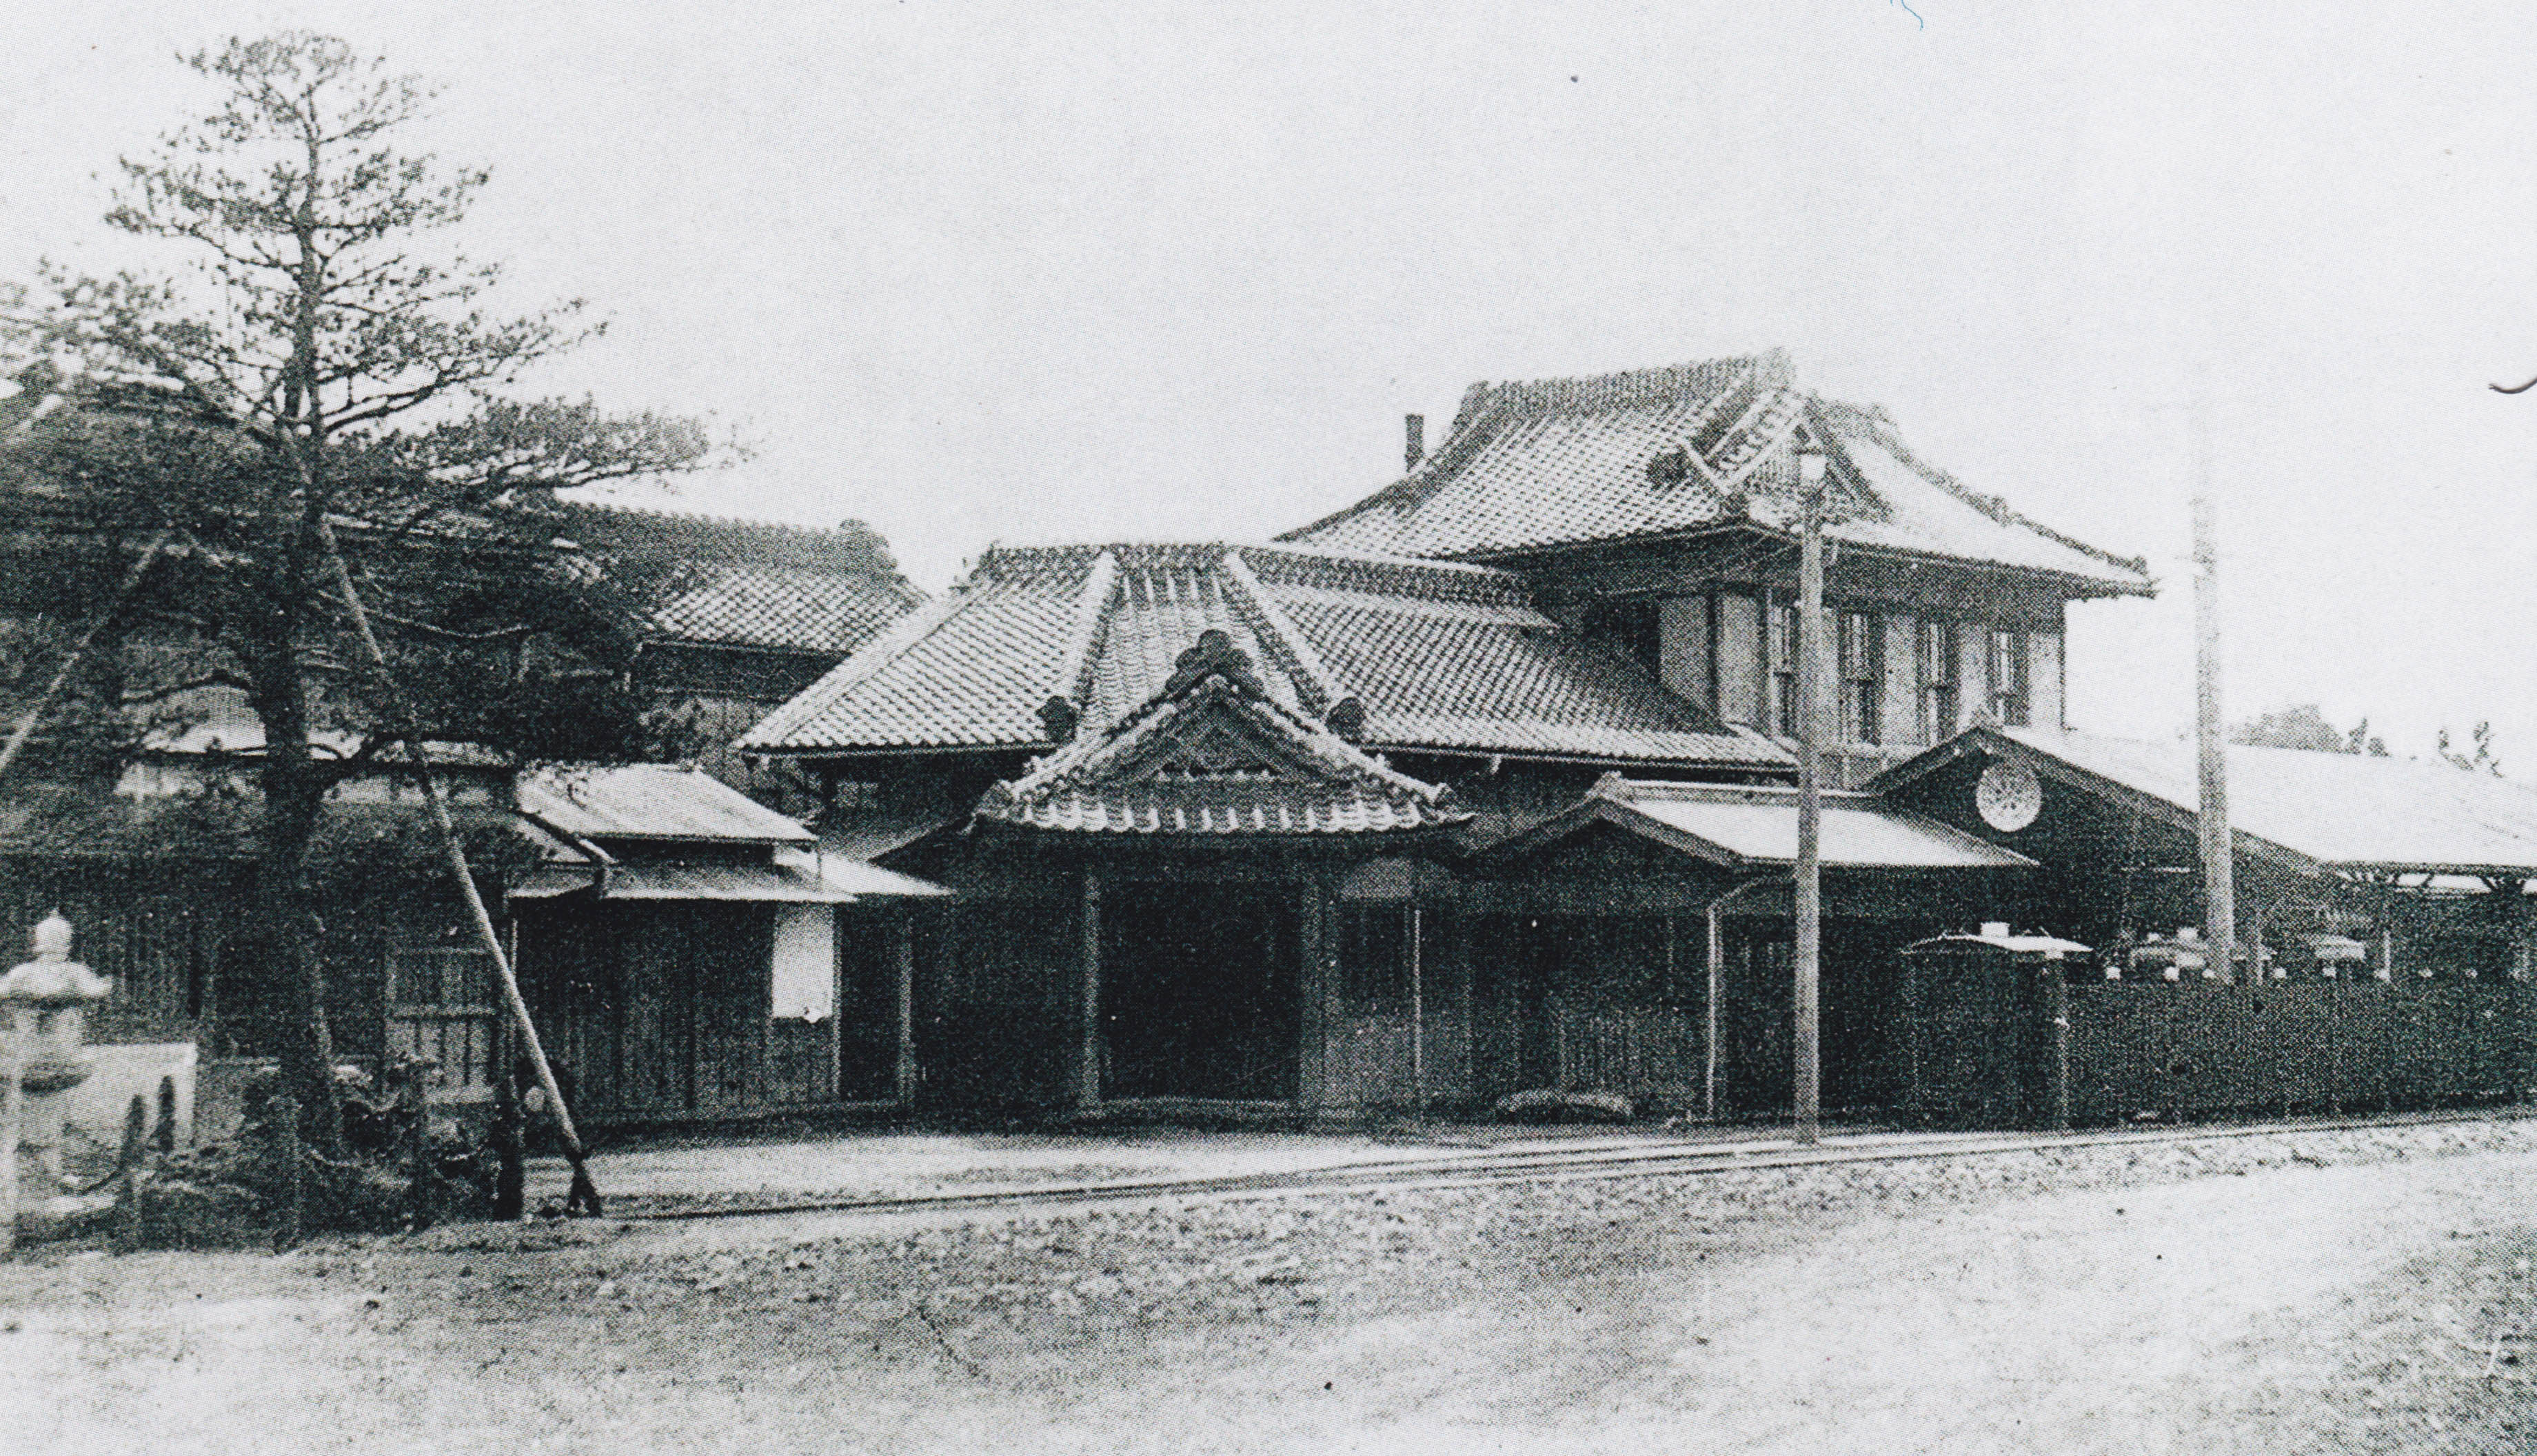 Utsunomiya Sekizai Kido (stone railway) Corporation, Zaimokucho Station (the current Takashima ENT Clinic) in 1907